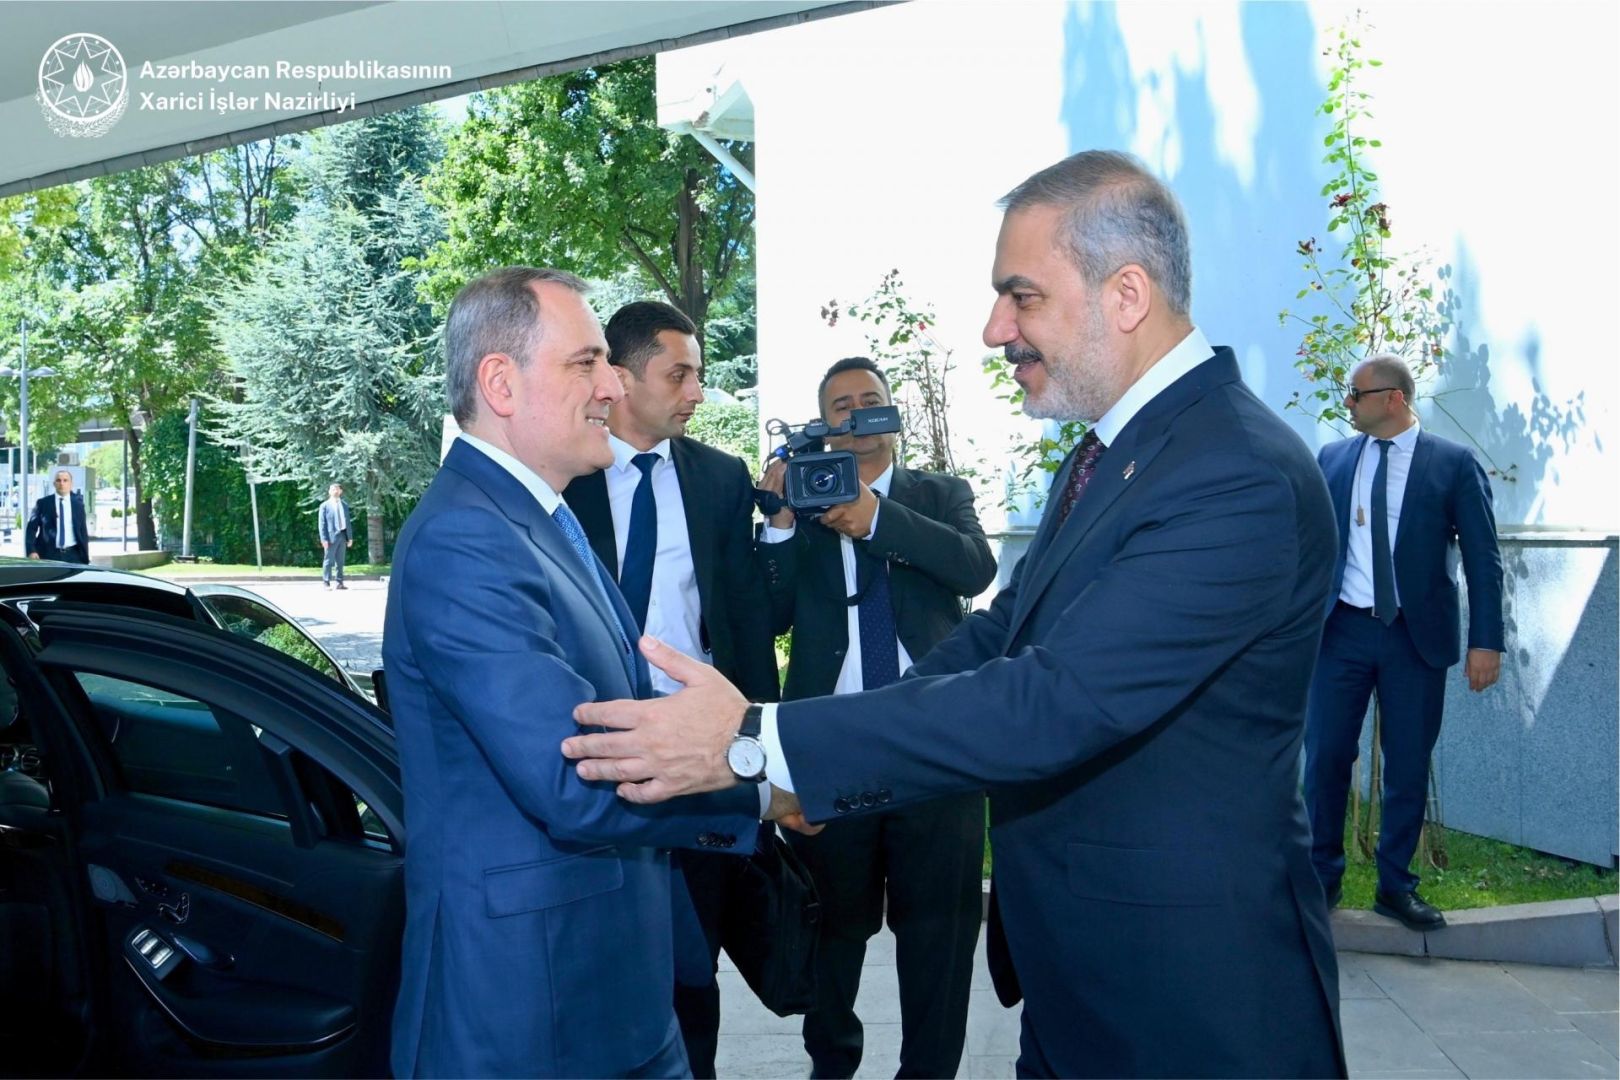 Meeting between Azerbaijani and Turkish foreign ministers kicks off in Ankara